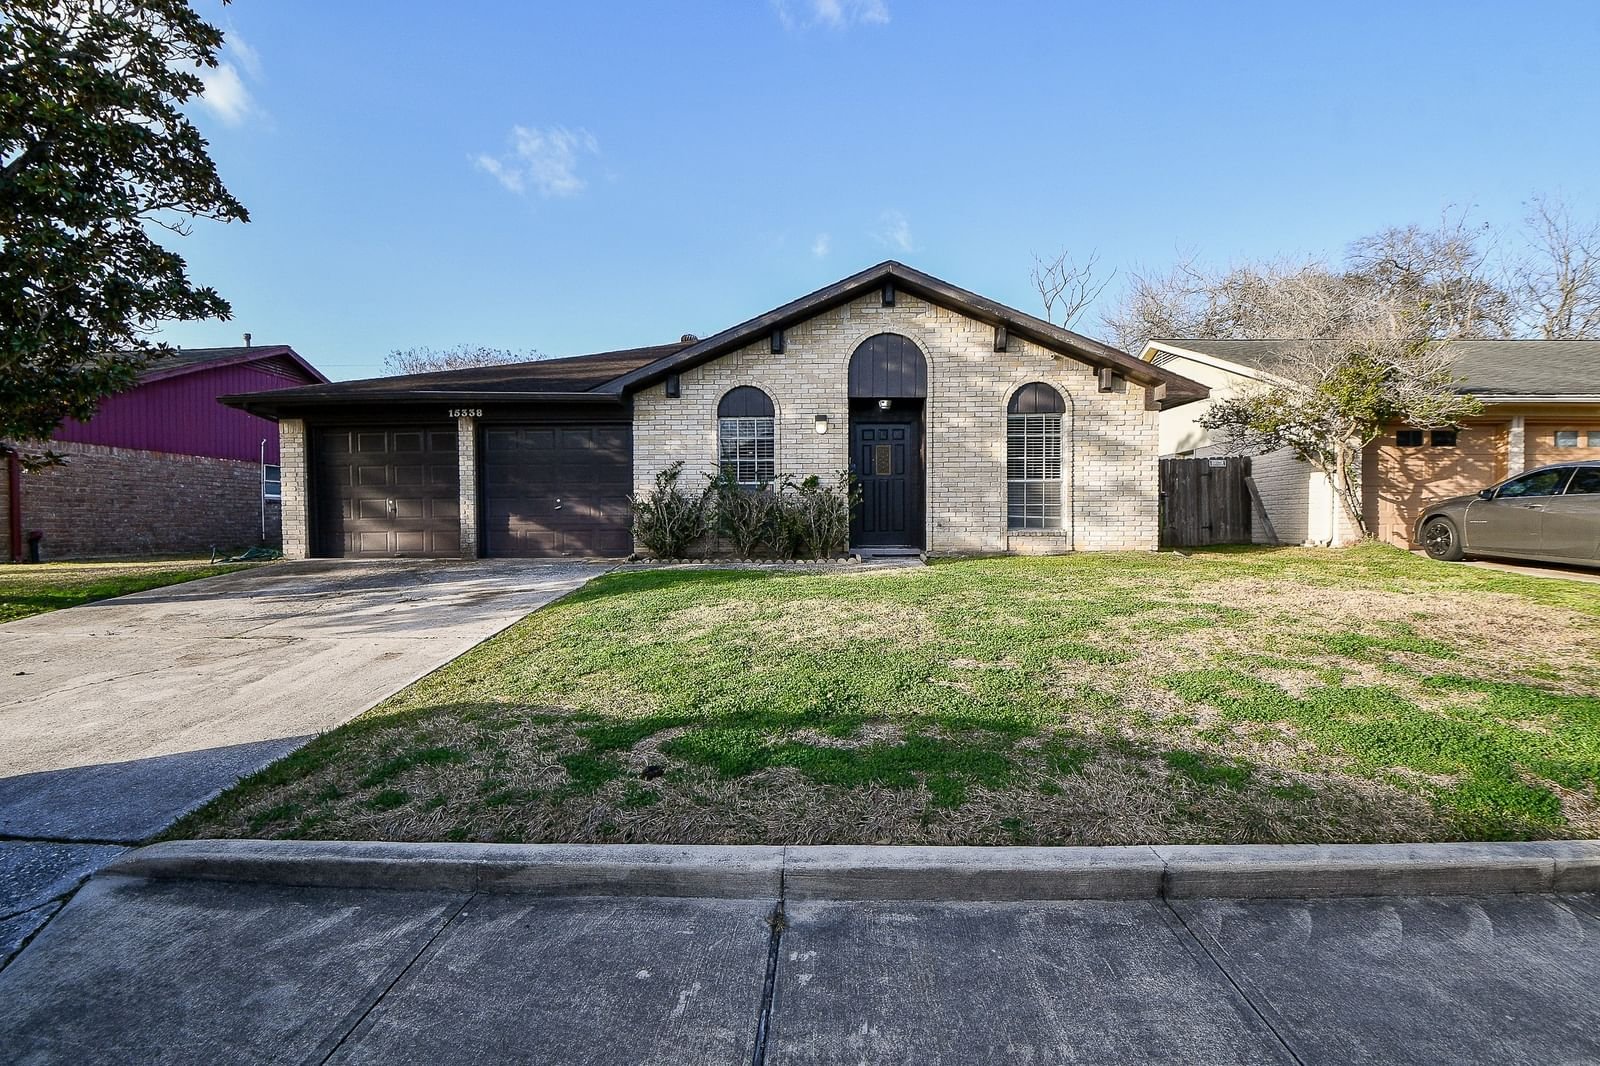 Real estate property located at 15338 Hampton, Harris, Fondren Park, Houston, TX, US